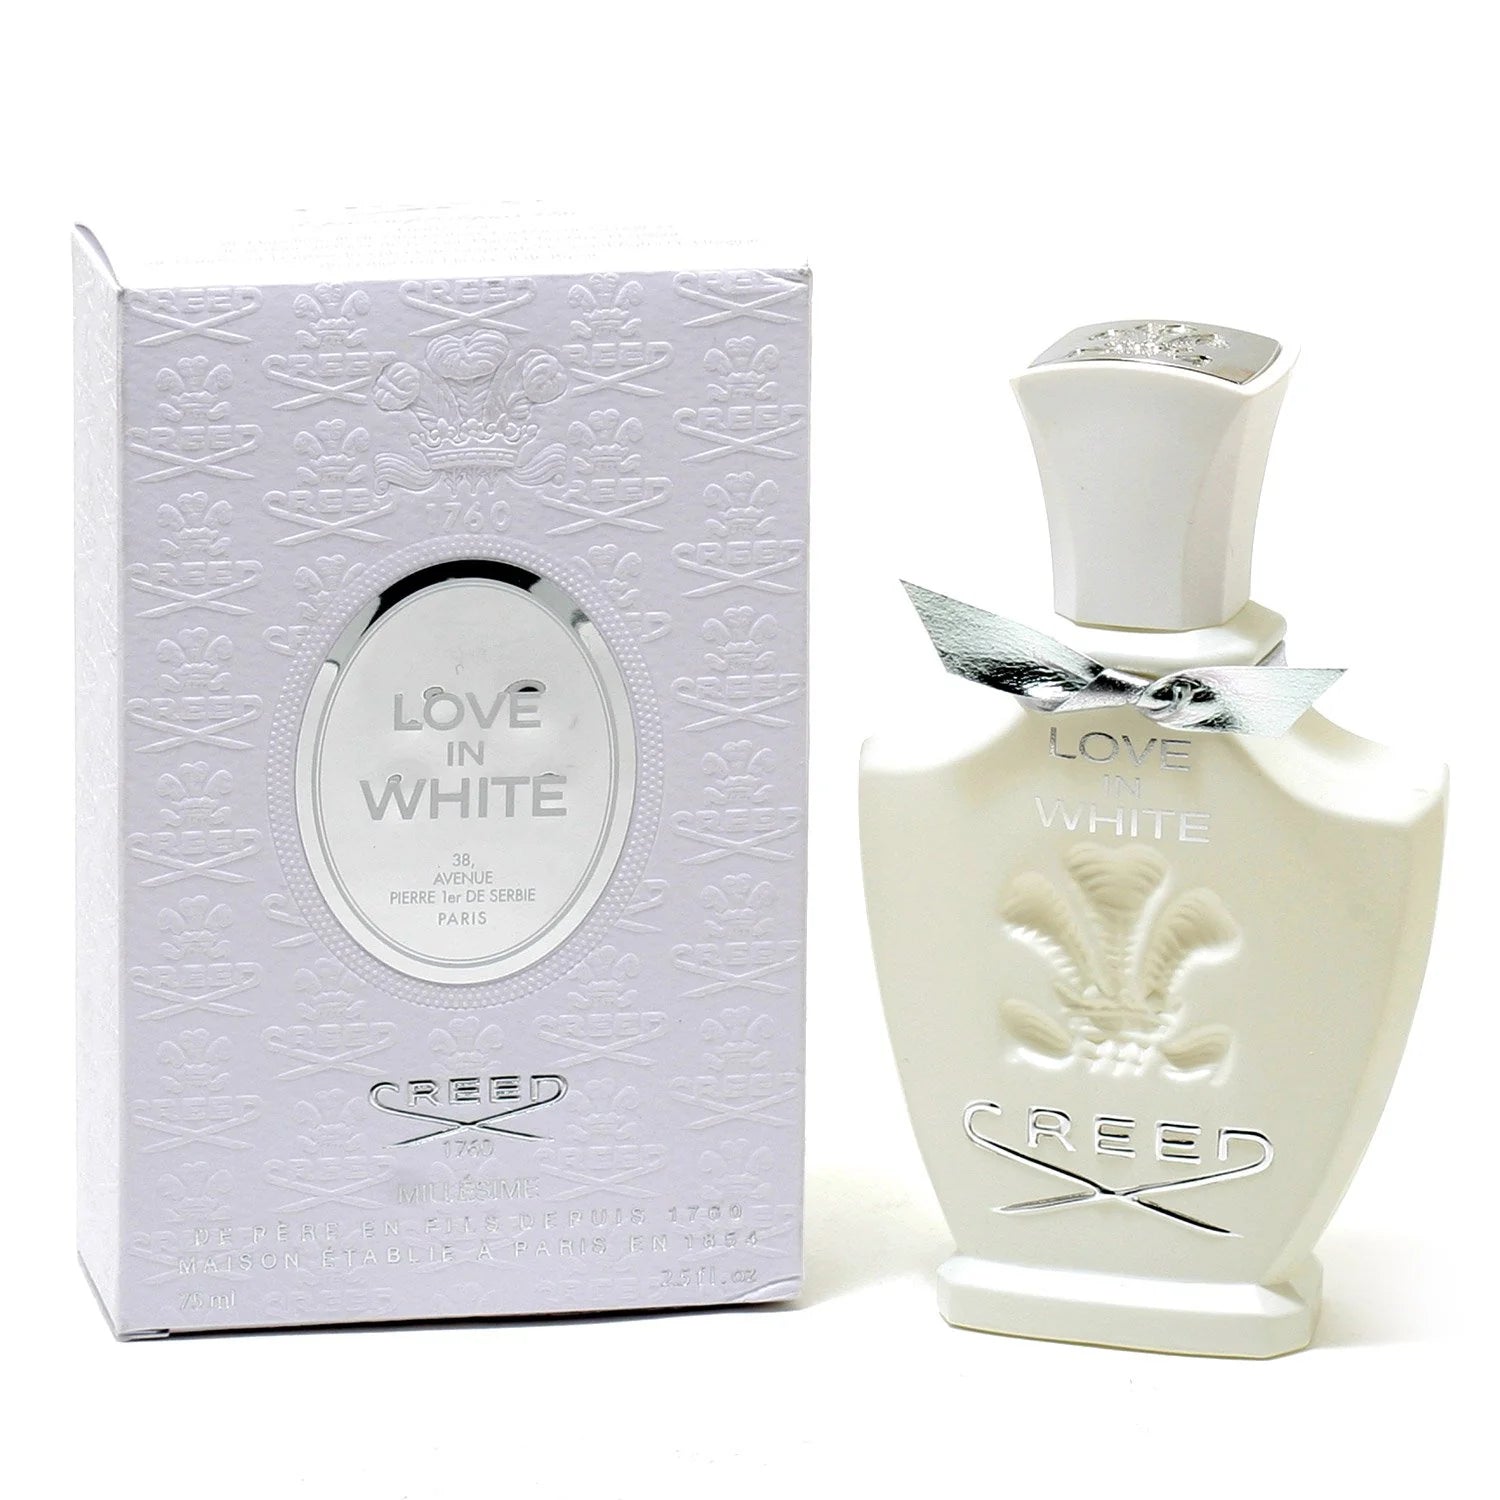 Вайт лове. Creed - Love in White Eau de Parfum. Creed Love in White, 75 ml. Creed духи женские Love in White. Creed Love in White 2.5 ml.